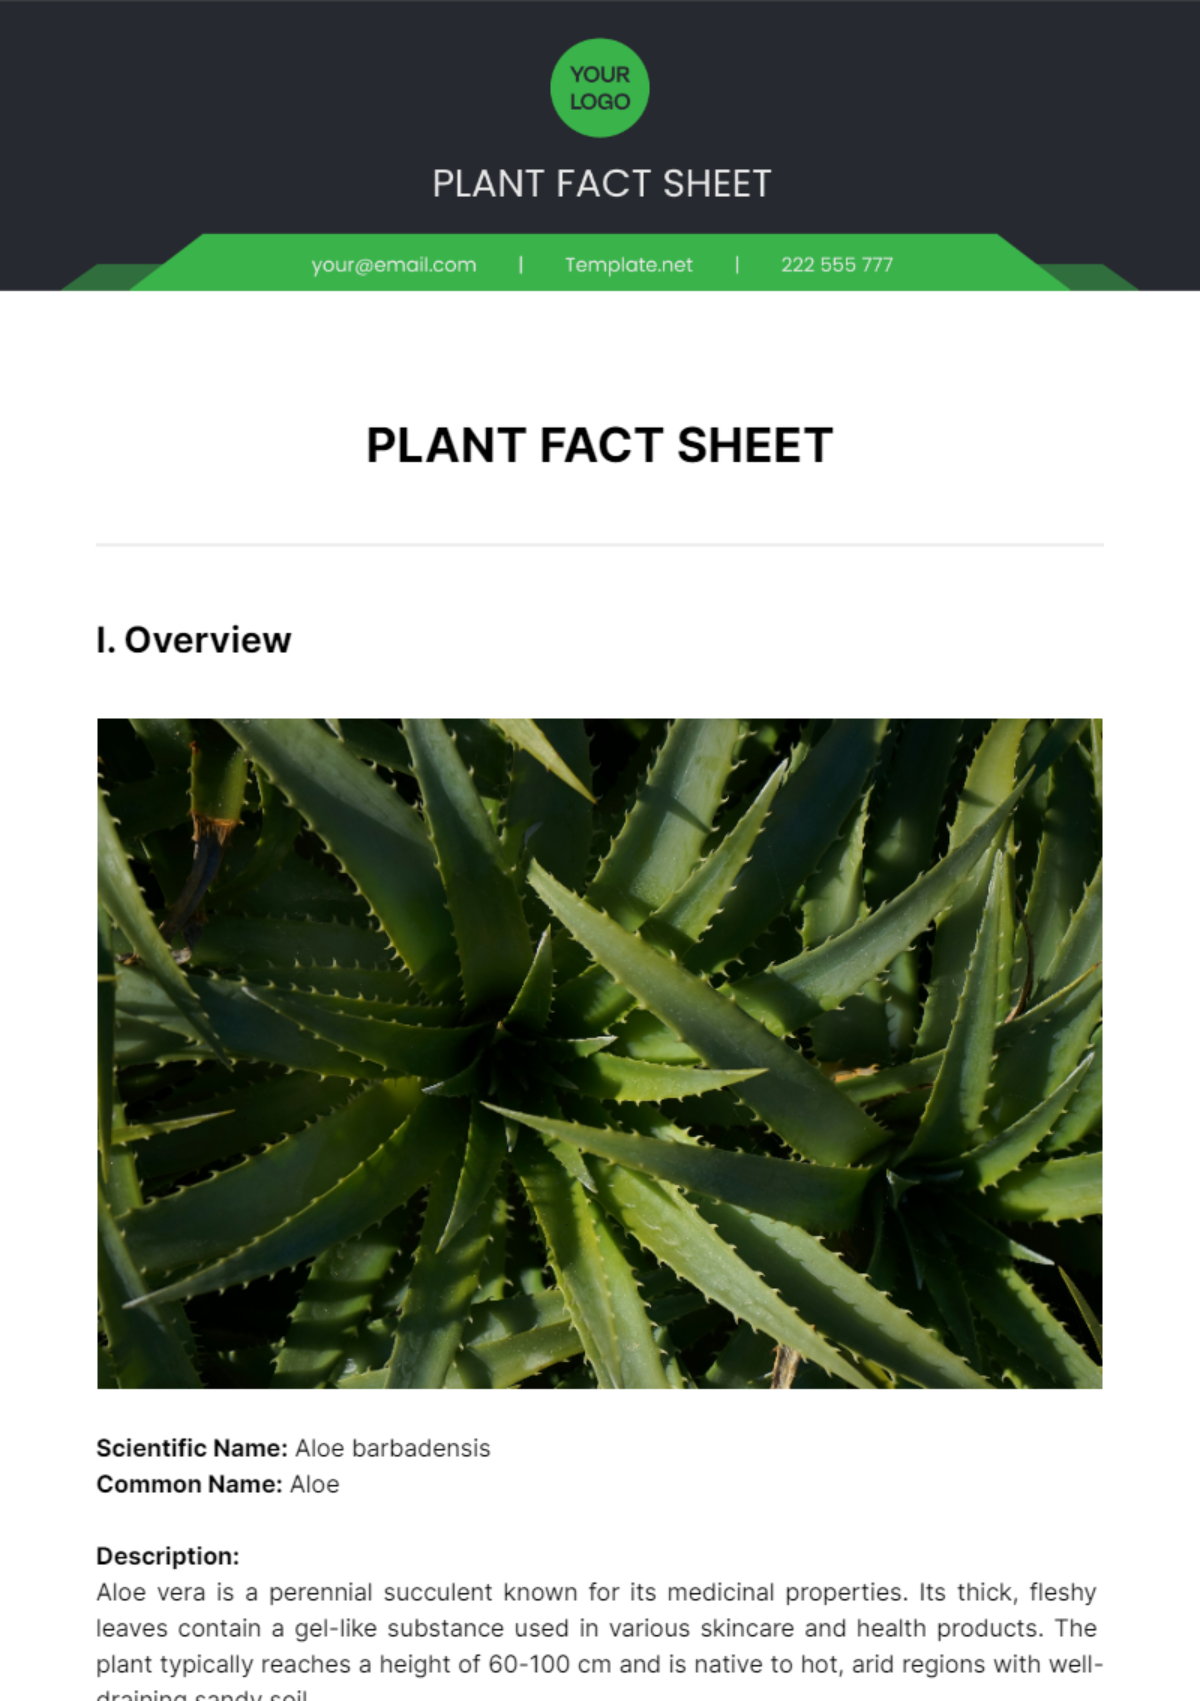 Plant Fact Sheet Template